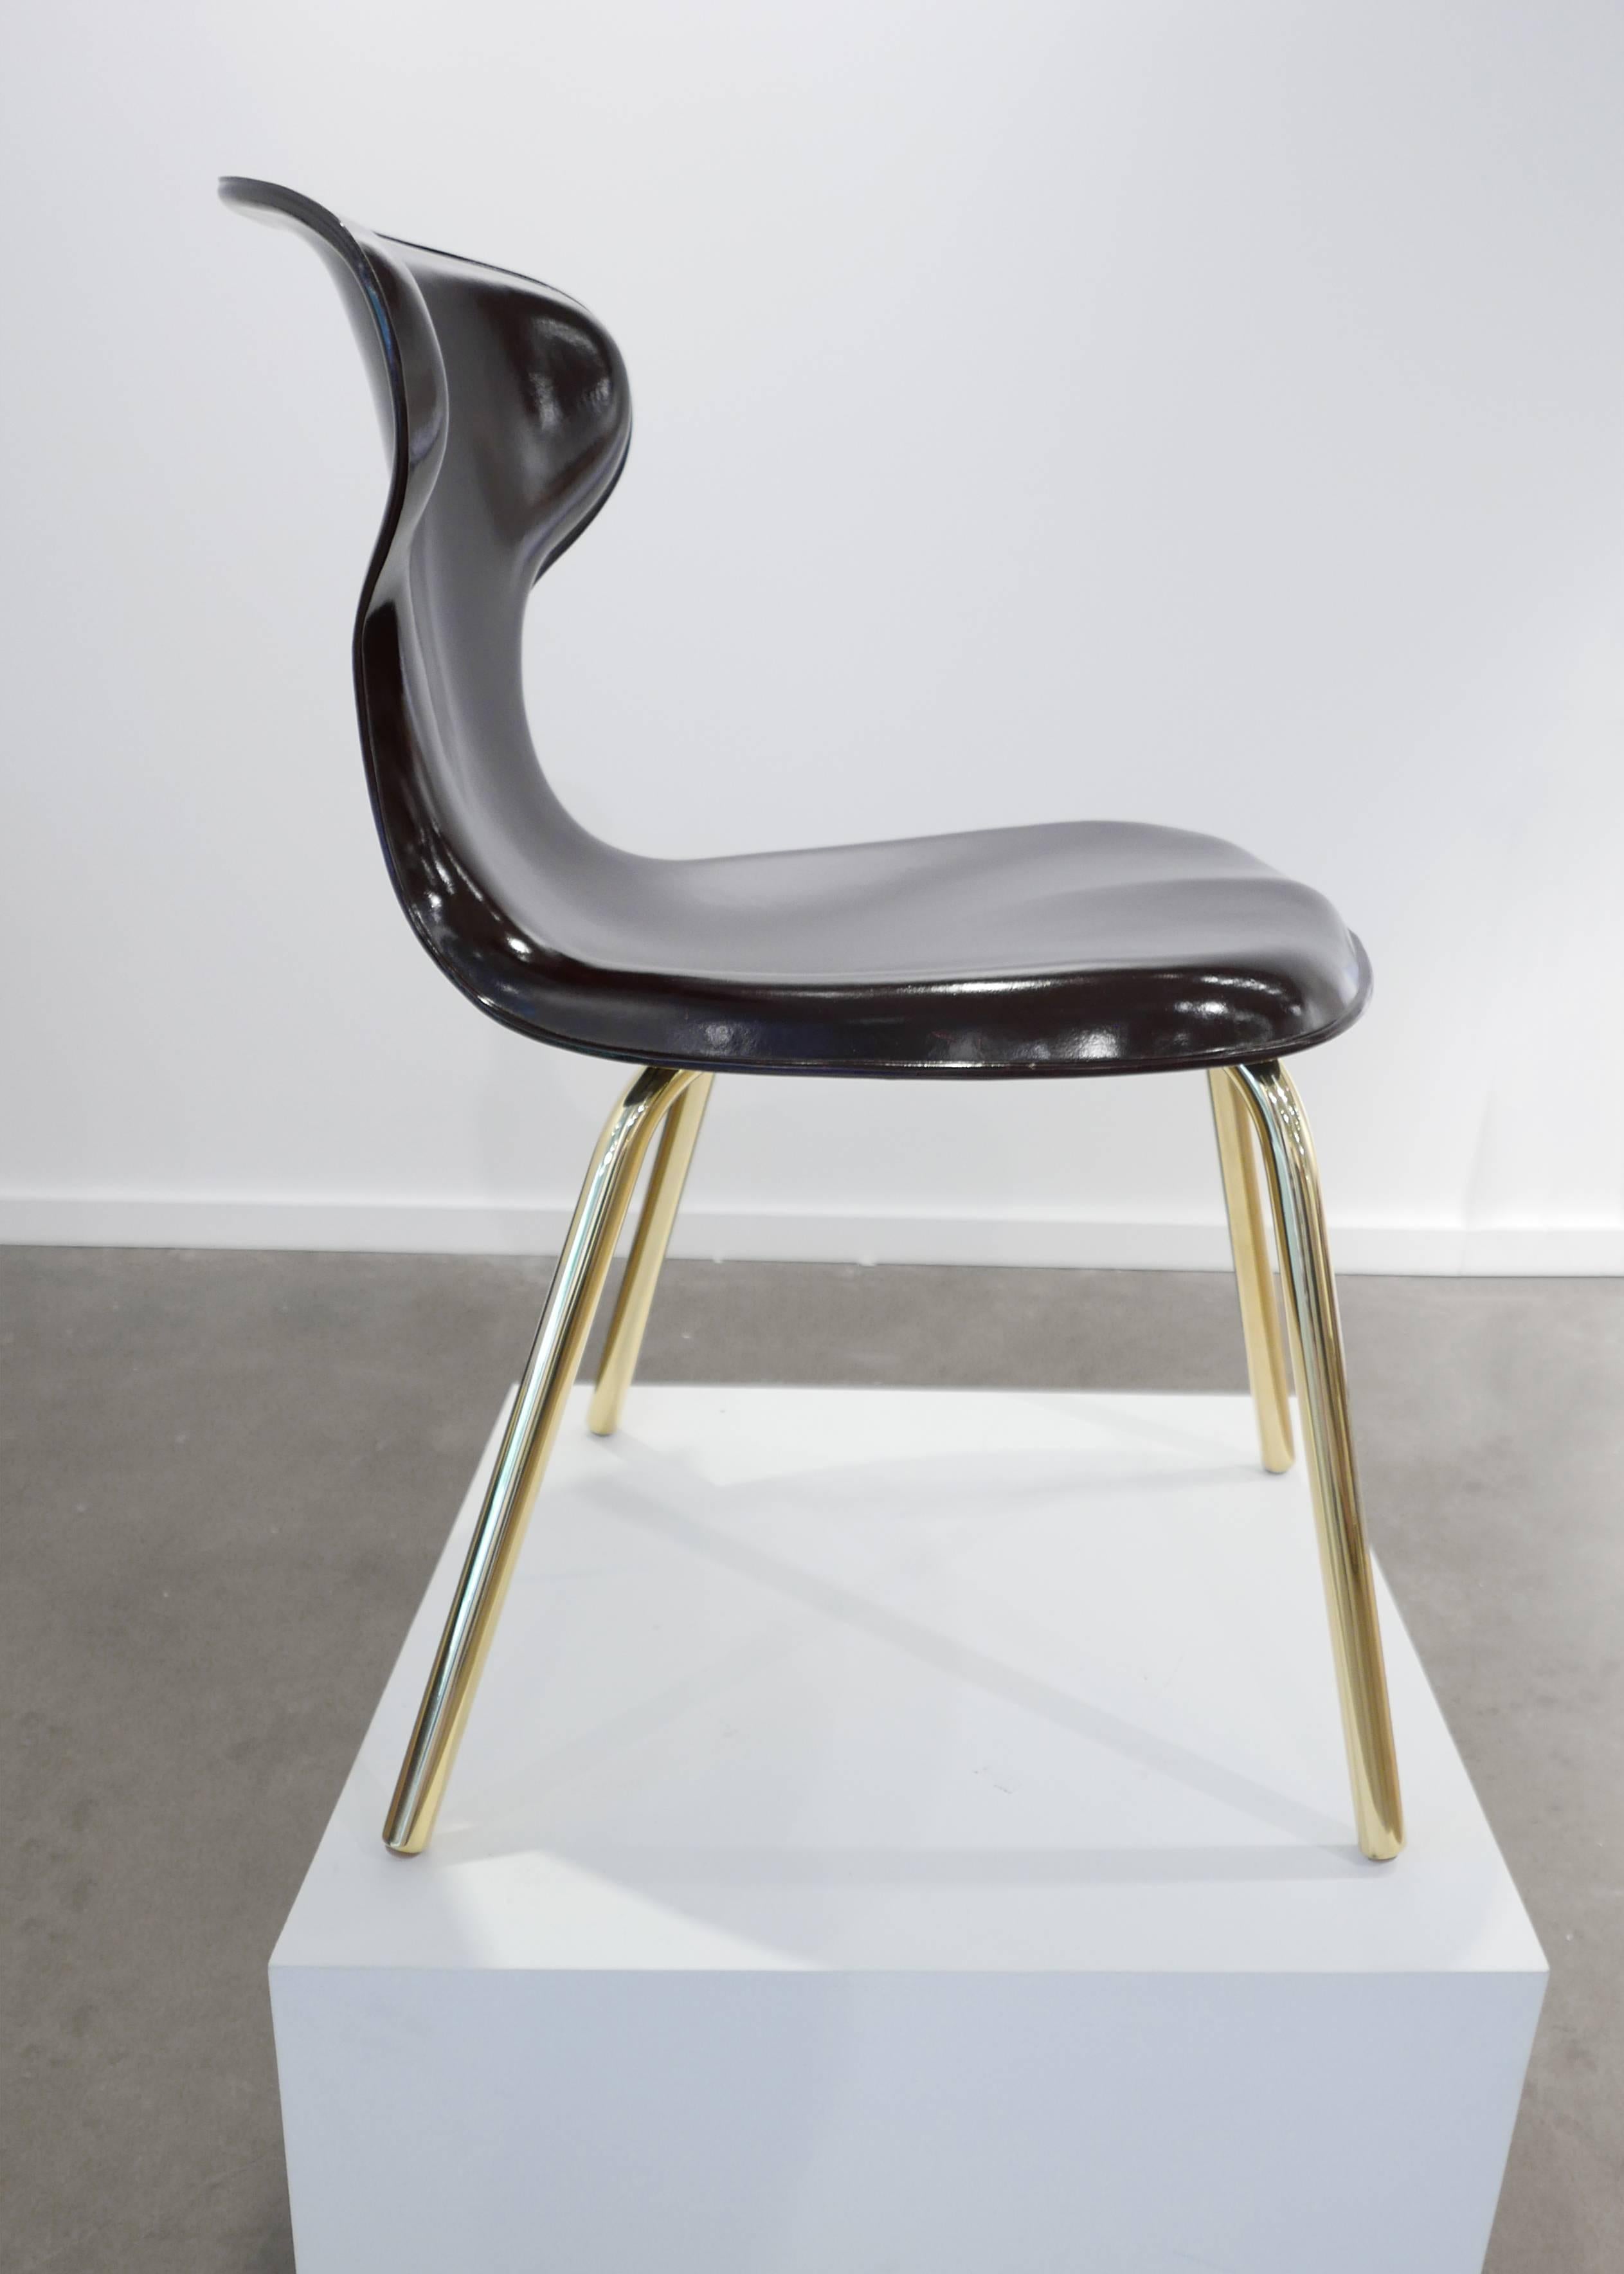 American Egmont Arens Fiberglass Chair For Sale